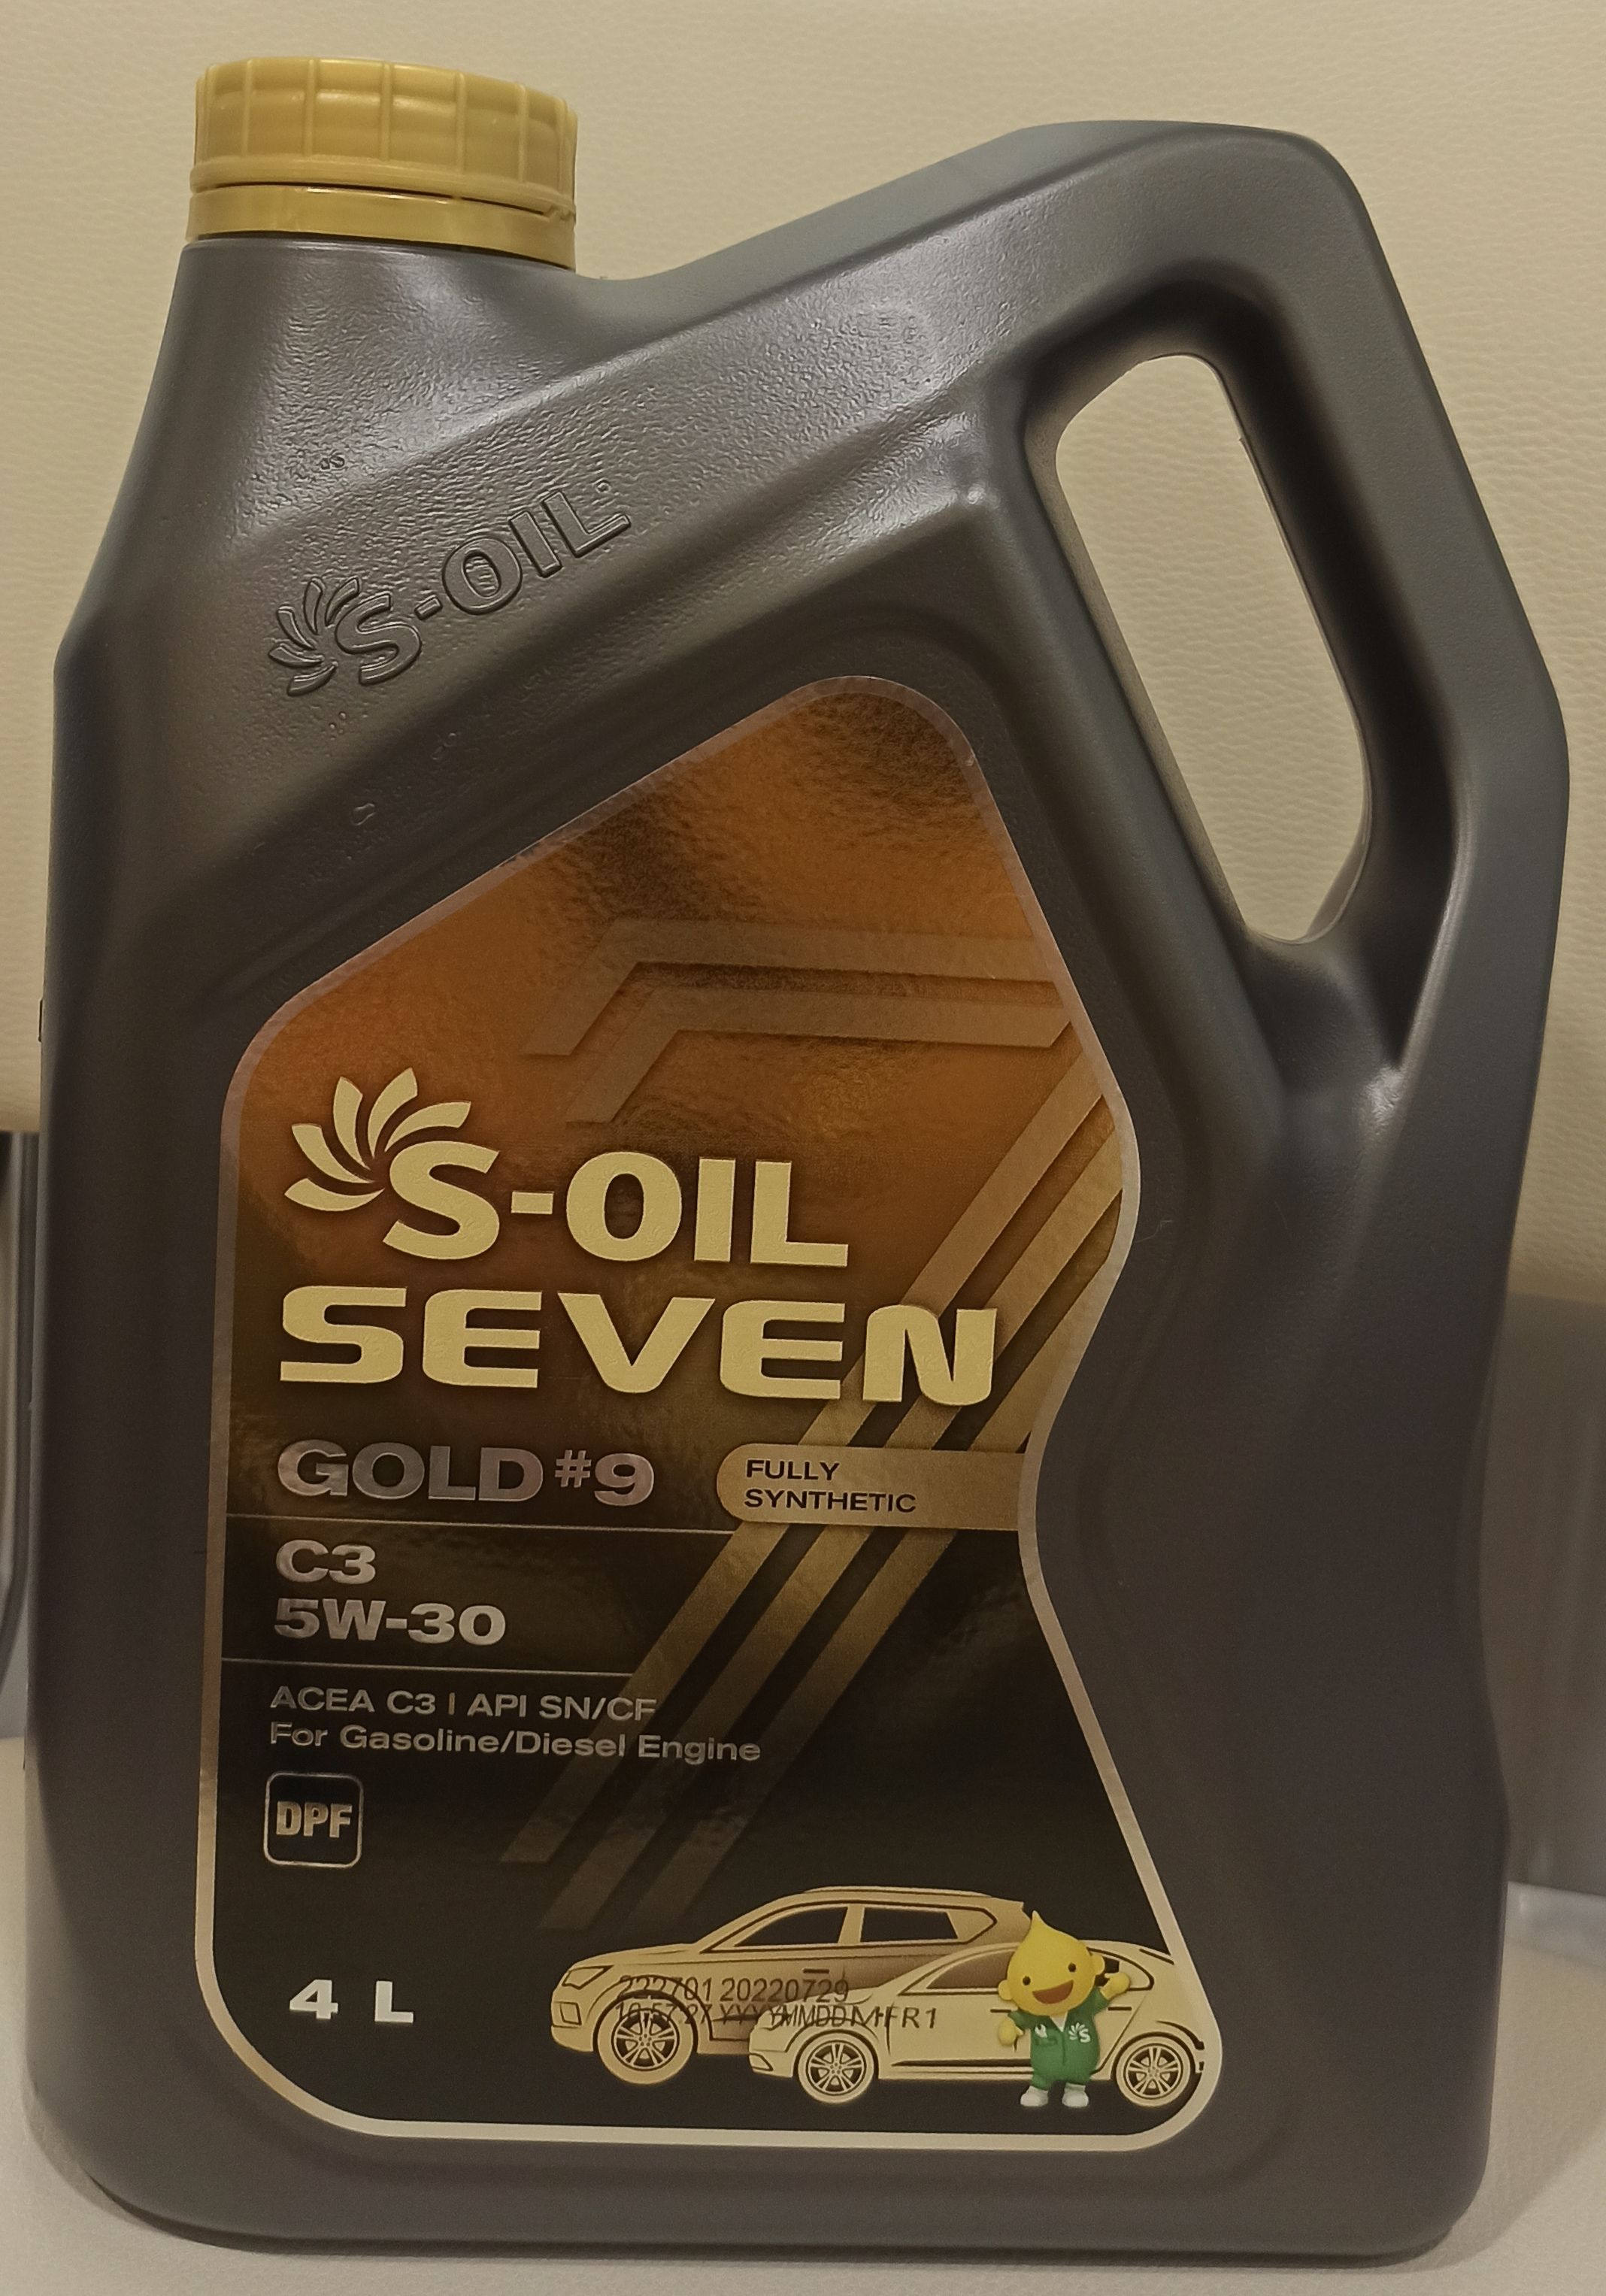 S-Oil Seven 5w-30. Масло s-Oil Seven 5w30. S Oil Seven 5w30 PNG. Моторное масло VW 502 00. Vw 502 00 масло